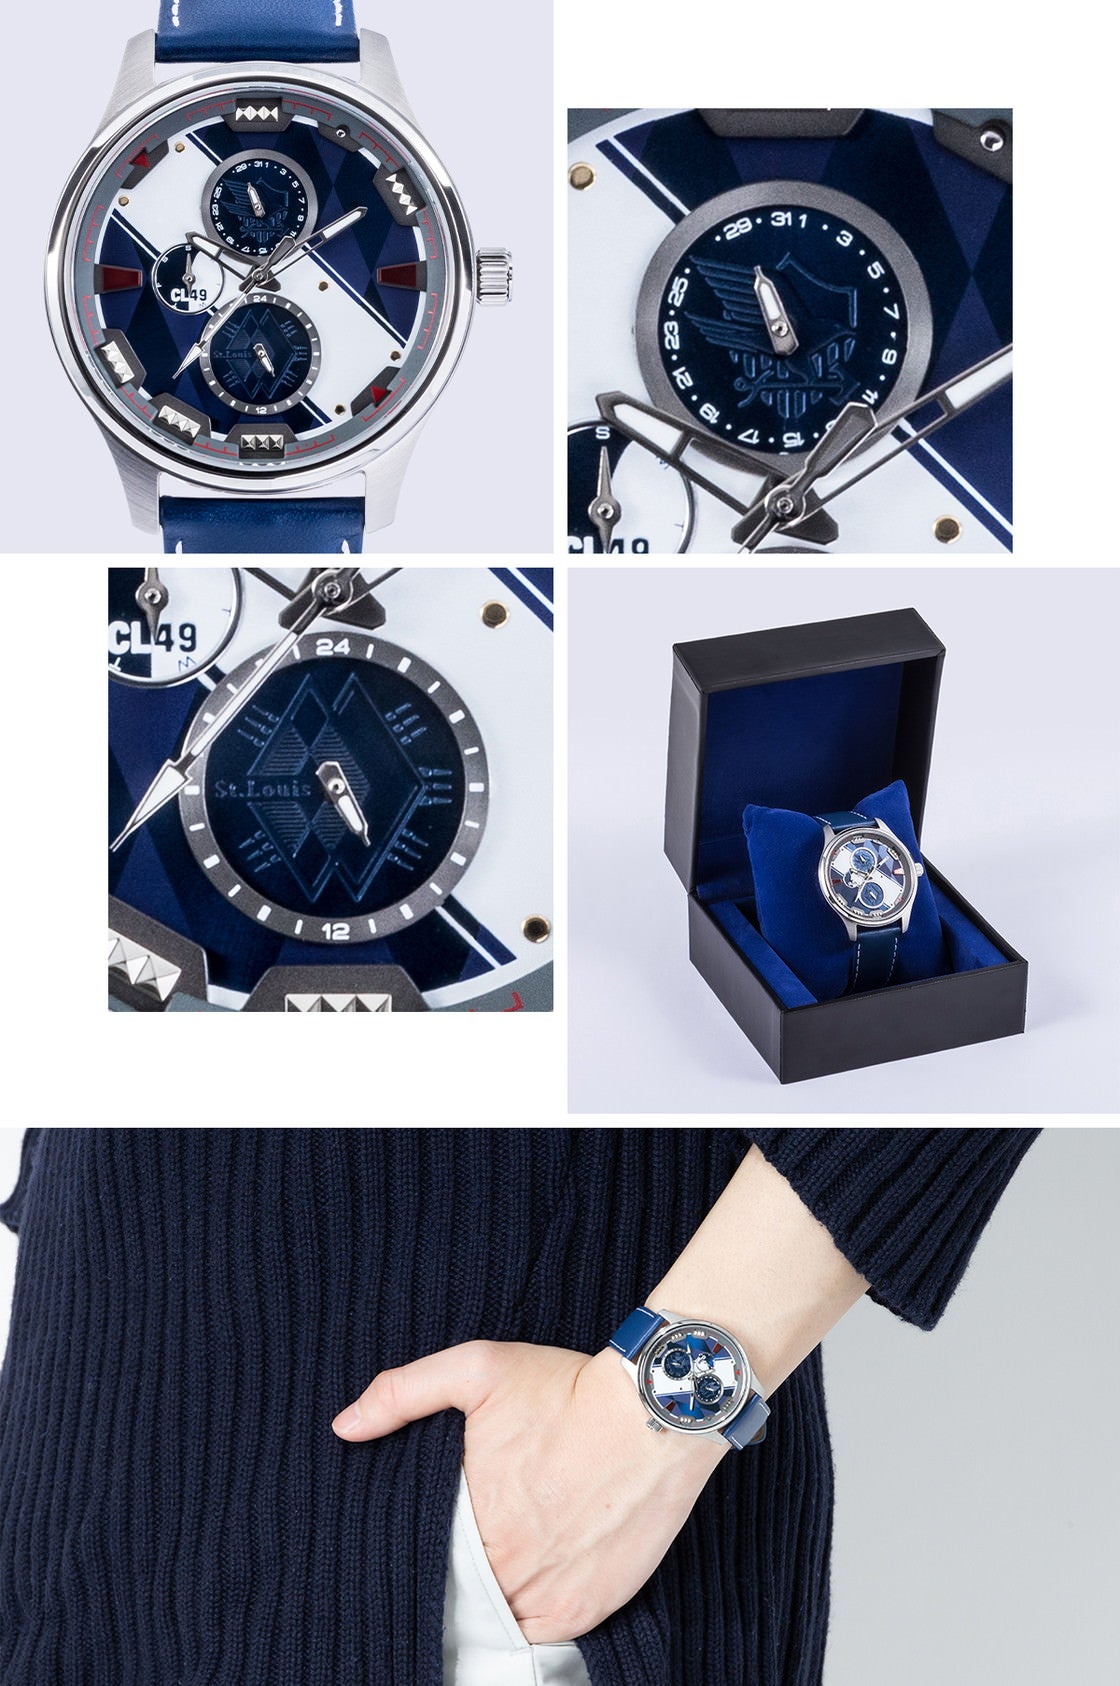 SuperGroupies アズールレーン セントルイスモデル 腕時計